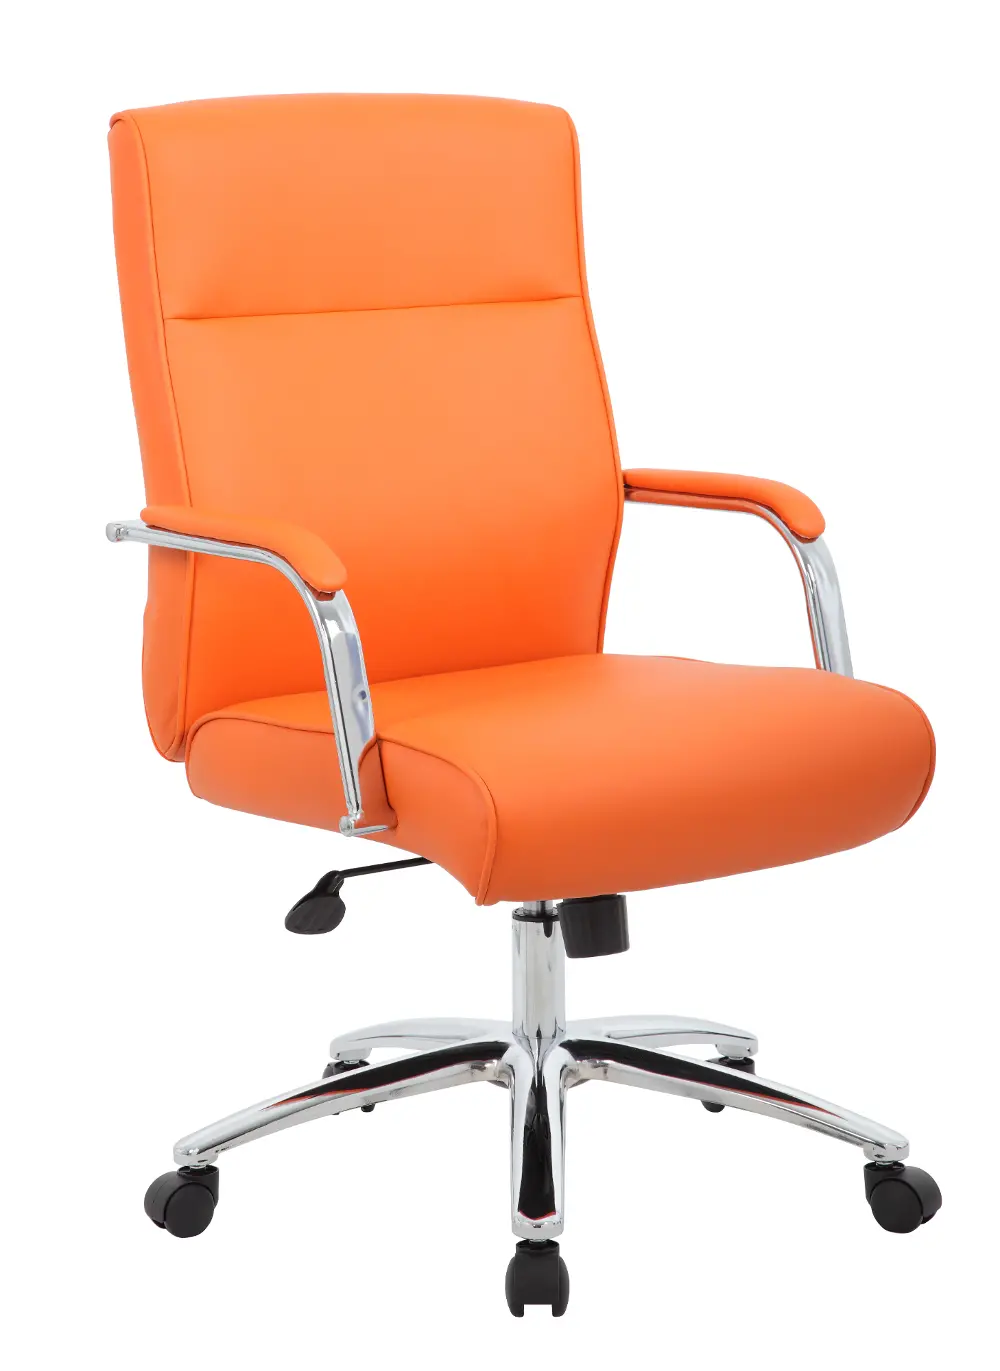 Orange Executive Office Chair-1